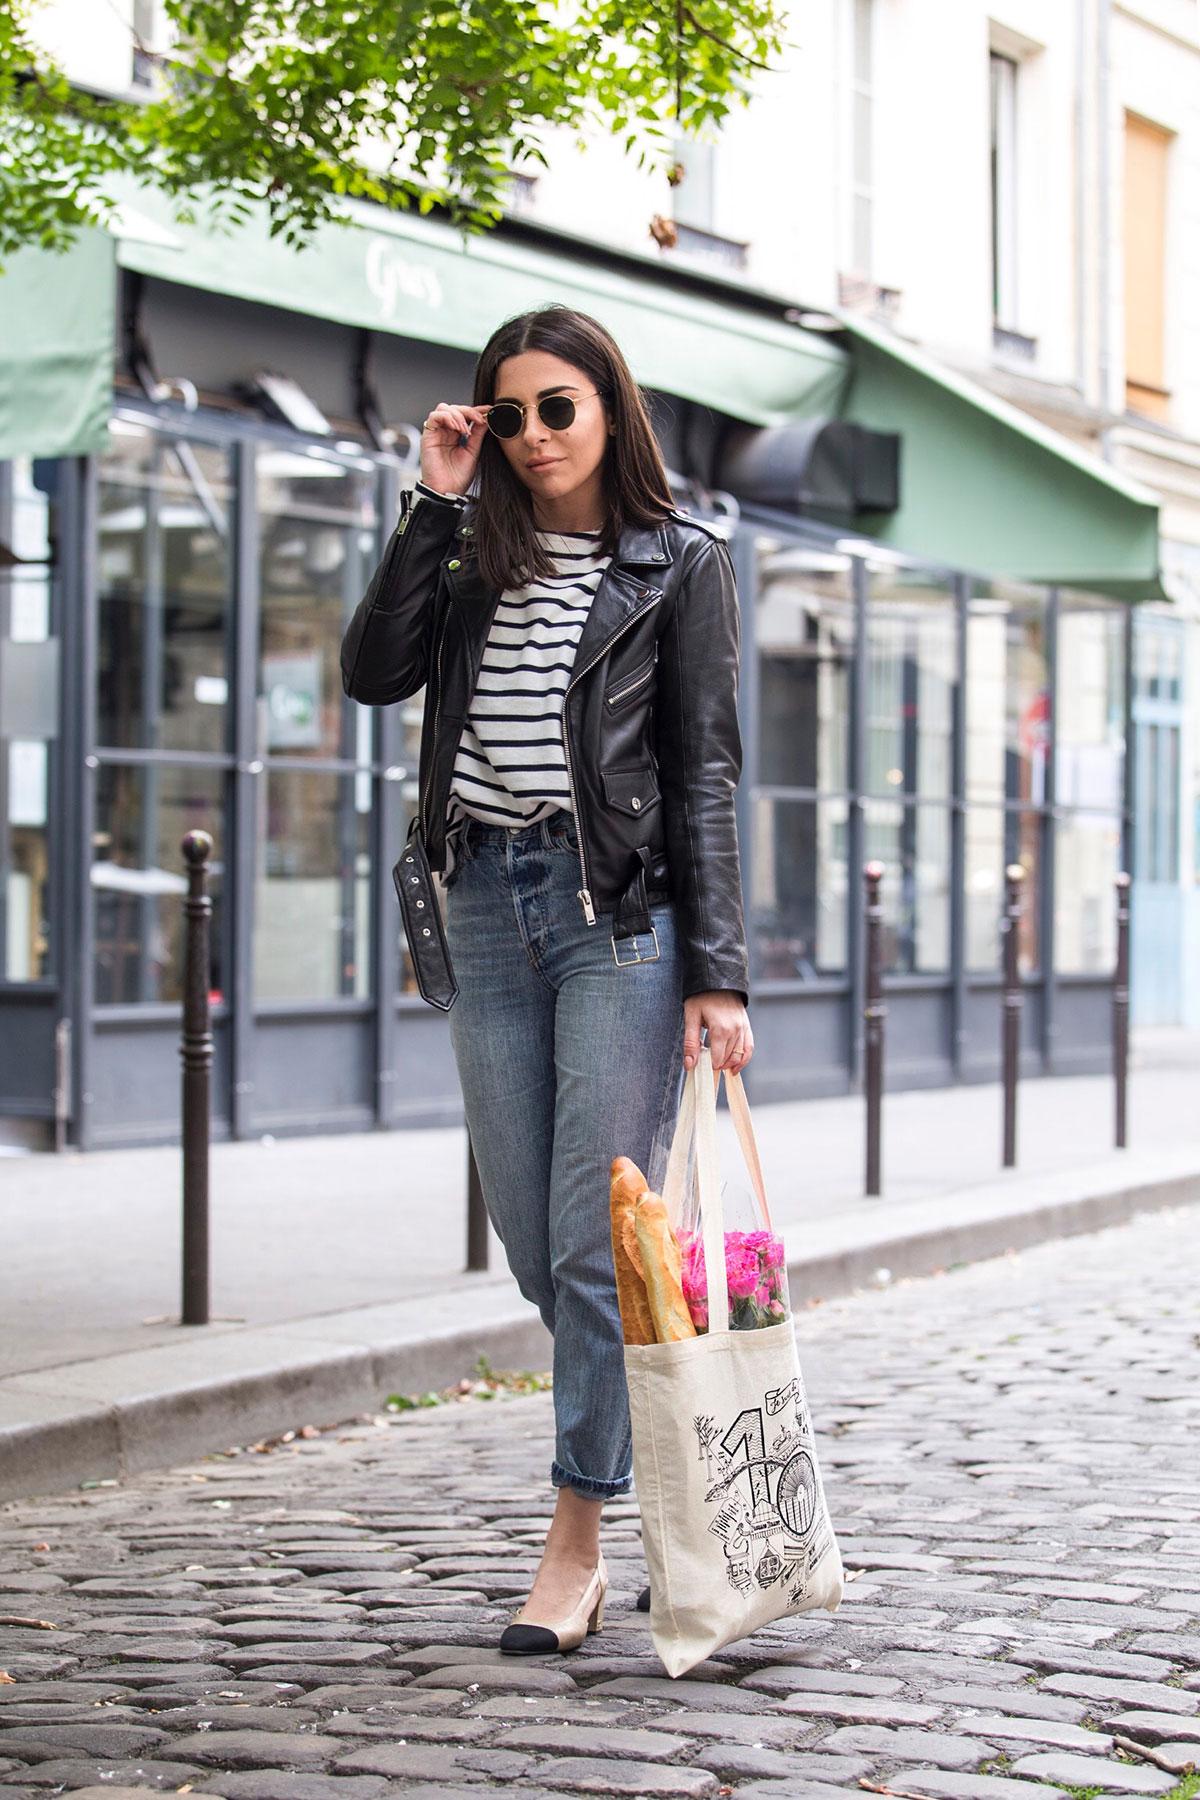 Breton Stripe Top & Jeans by Stella Asteria | Fashion & Lifestyle Blogger